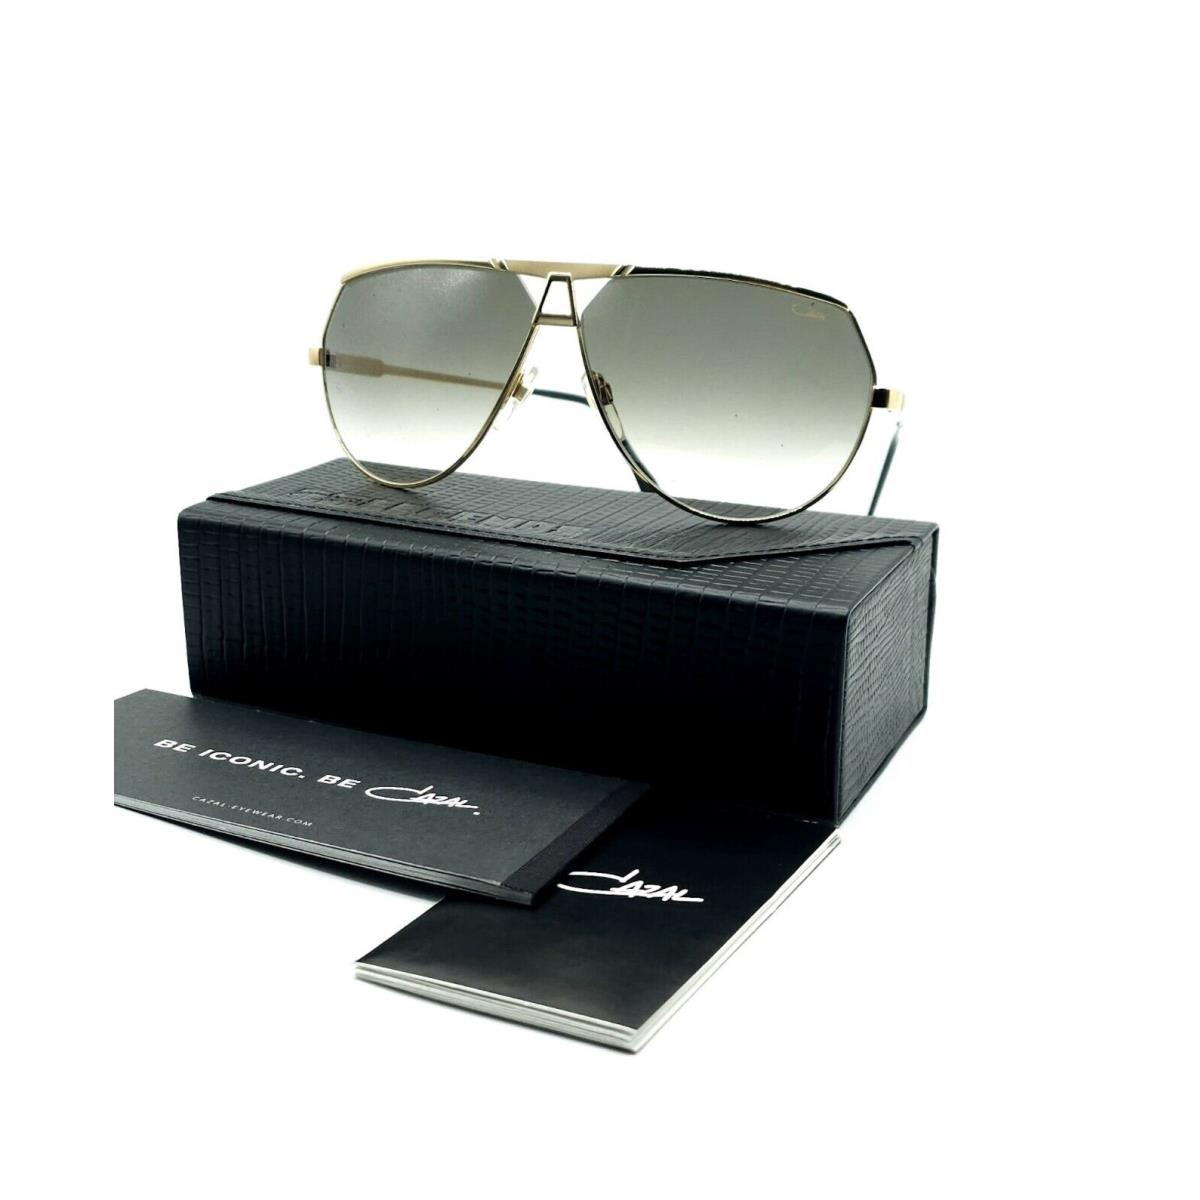 Cazal 953 Sunglasses Color 97 Gold - Olive Gradient Lenses Size 69